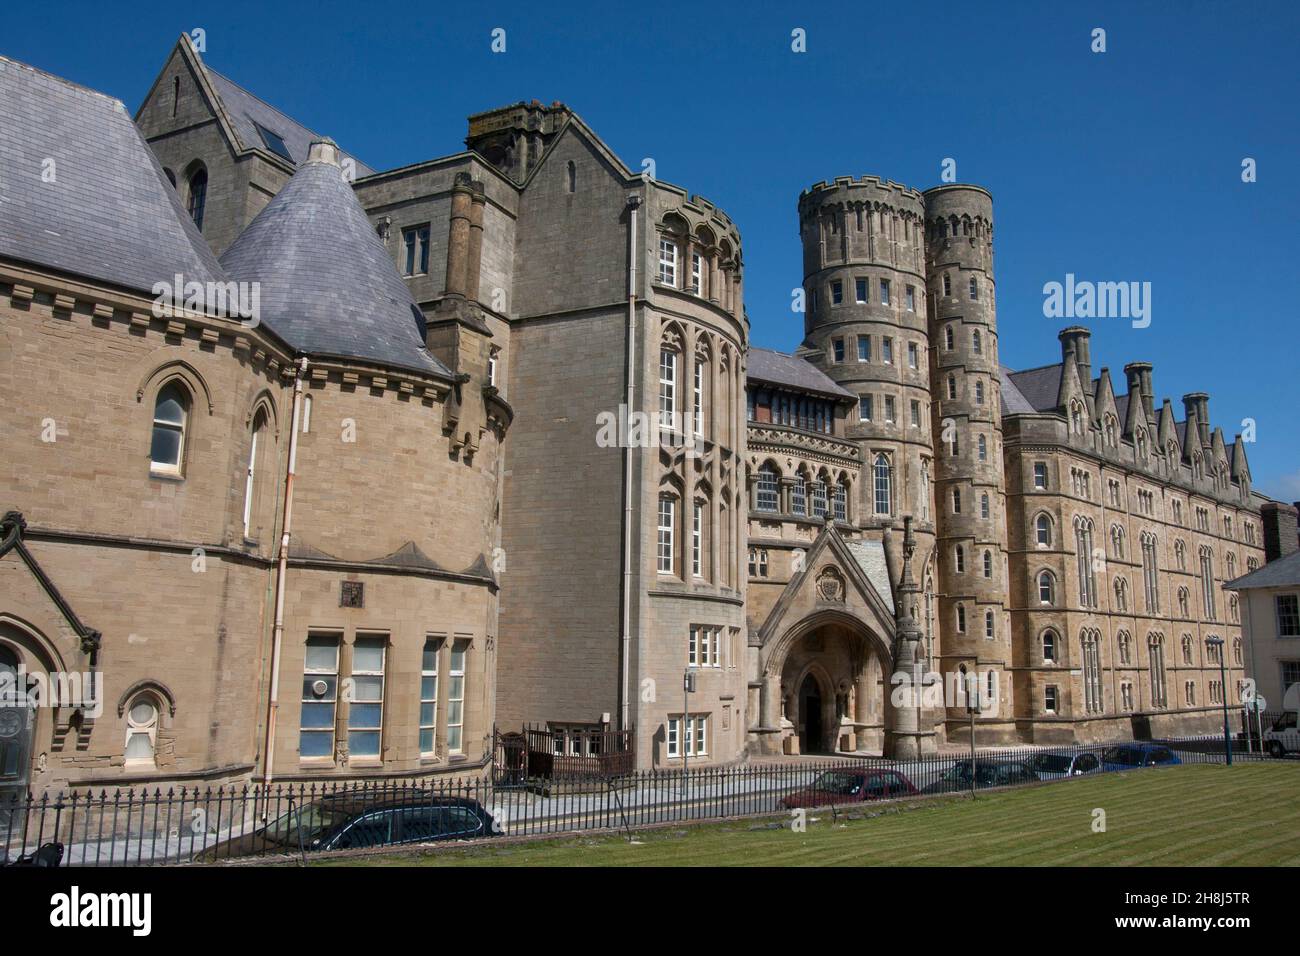 Edward I Old University College (1865), Aberystwyth, Ceredigion, pays de Galles Banque D'Images